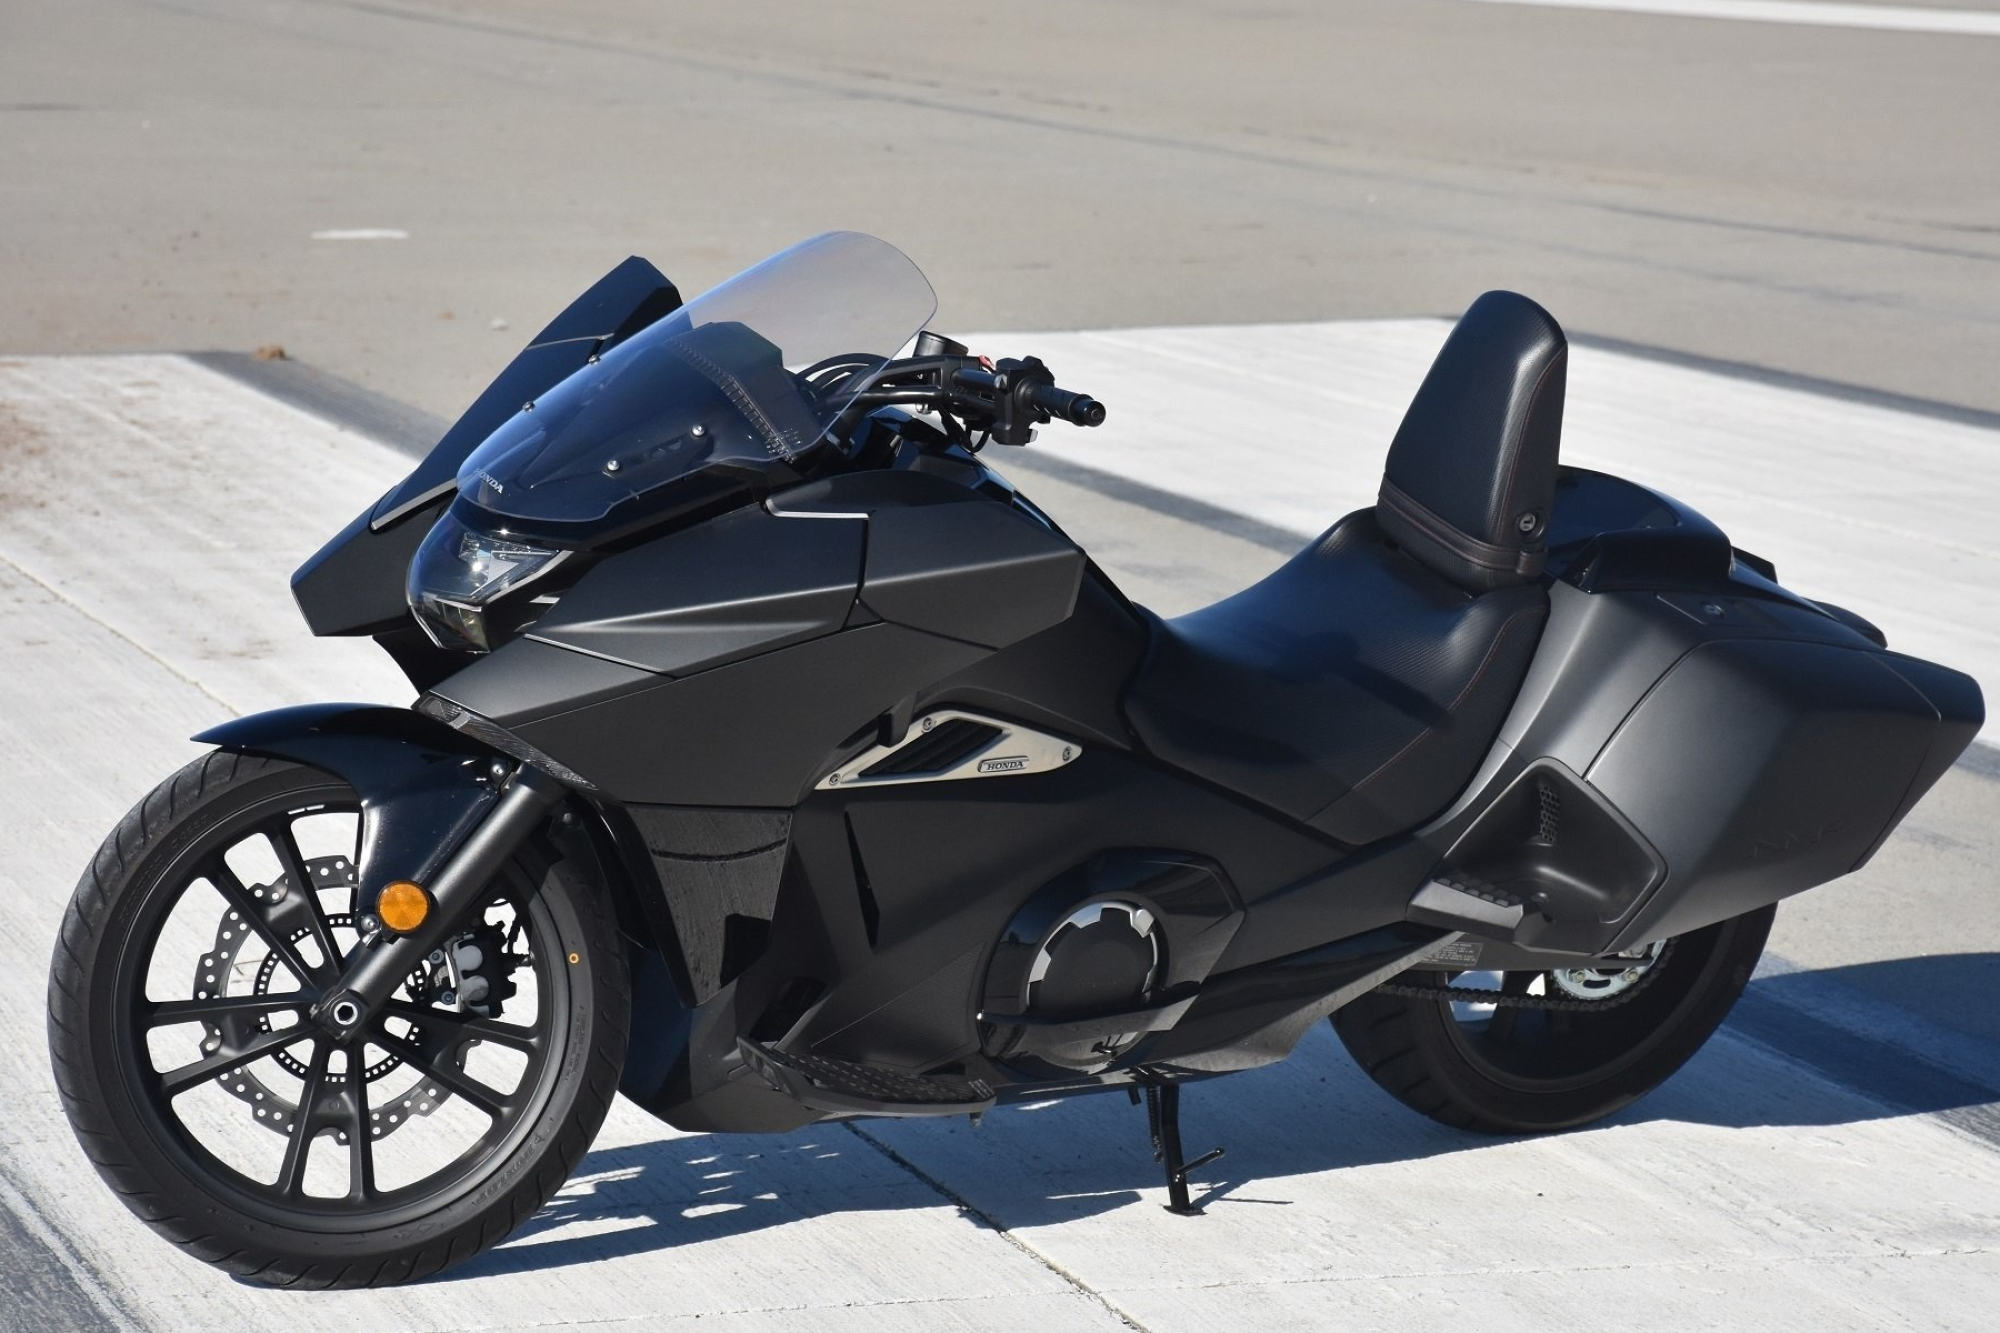 Honda NM4, Futuristic motorcycle wallpaper, High-resolution image, Stunning visuals, 2000x1340 HD Desktop